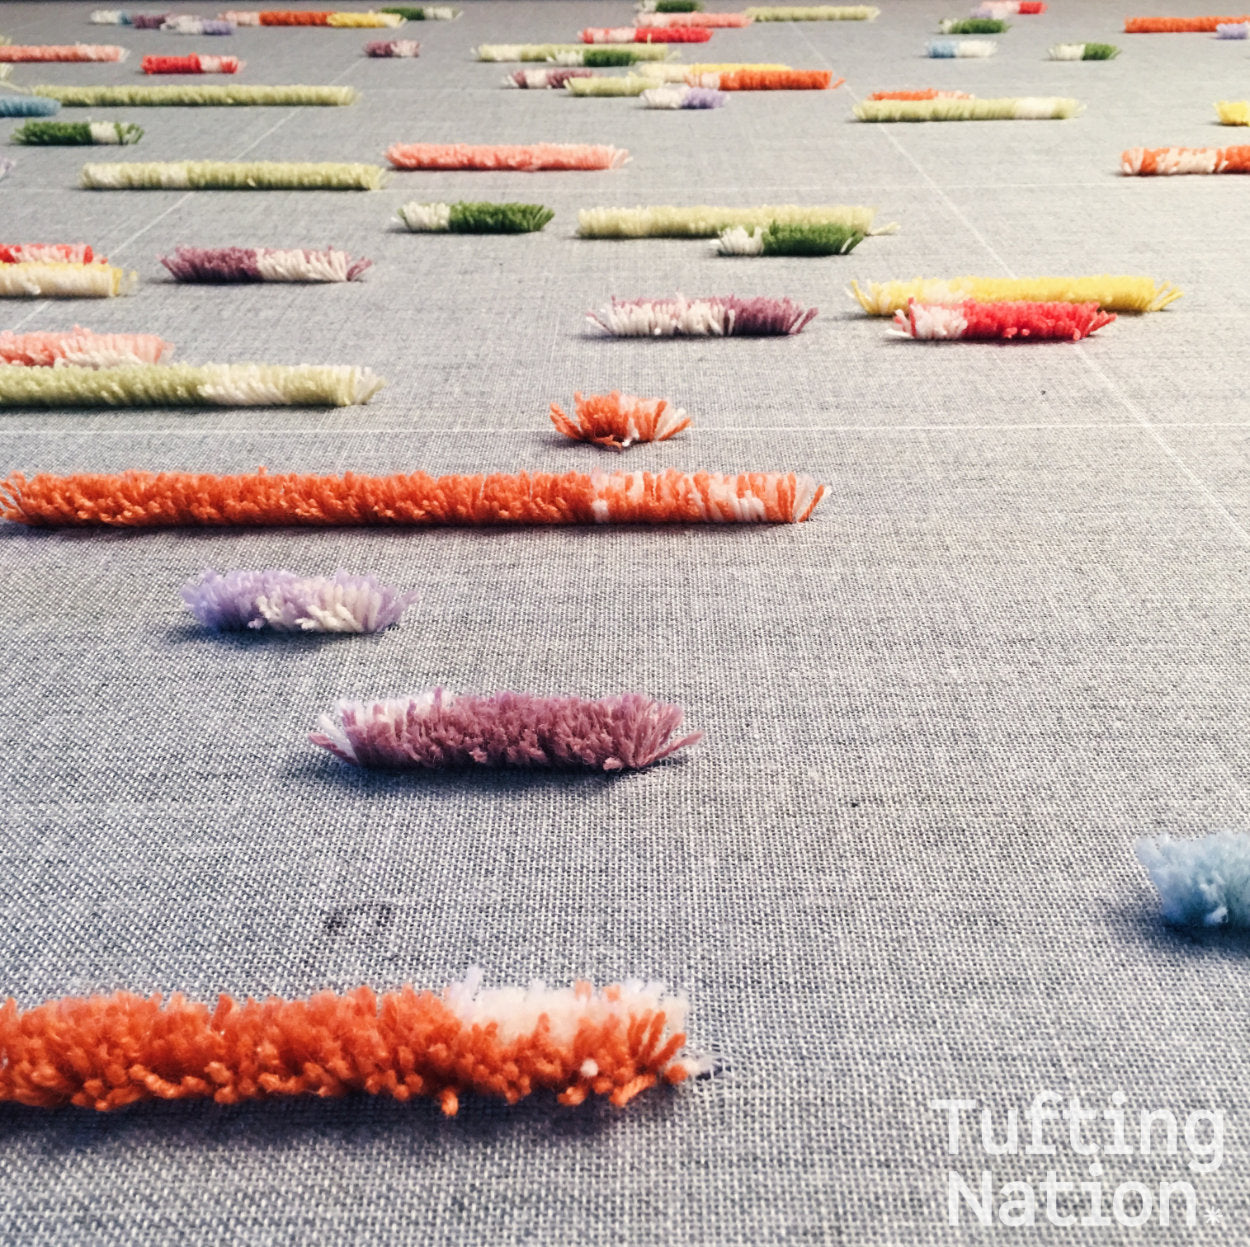 Wool Rug Yarn tufted on a Primary Rug Backing | Rug Making in Progress | TuftingNation